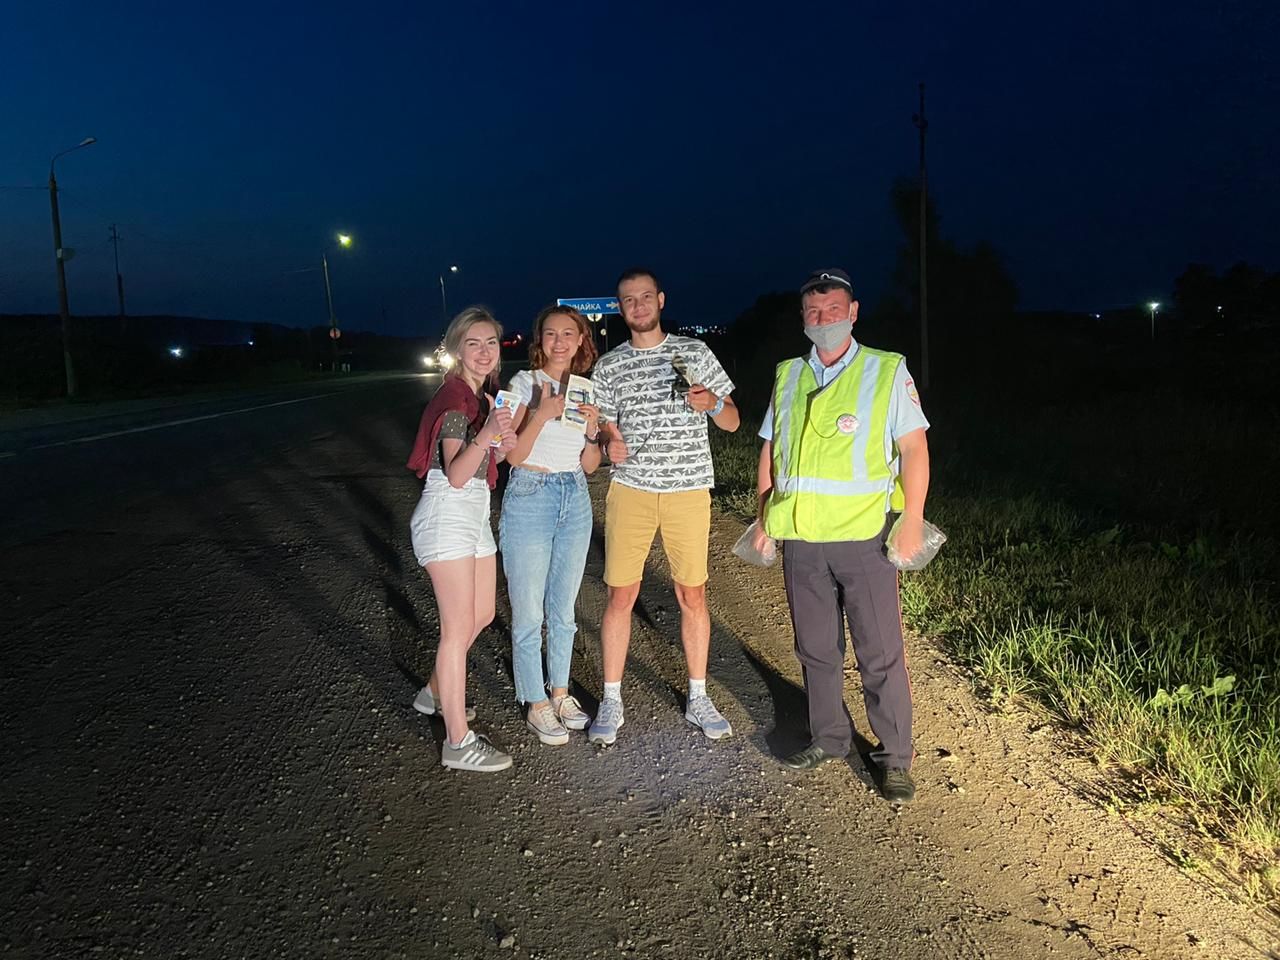 Сотрудники ГИБДД подарили пешеходам фонари для перехода дороги в тёмное время суток